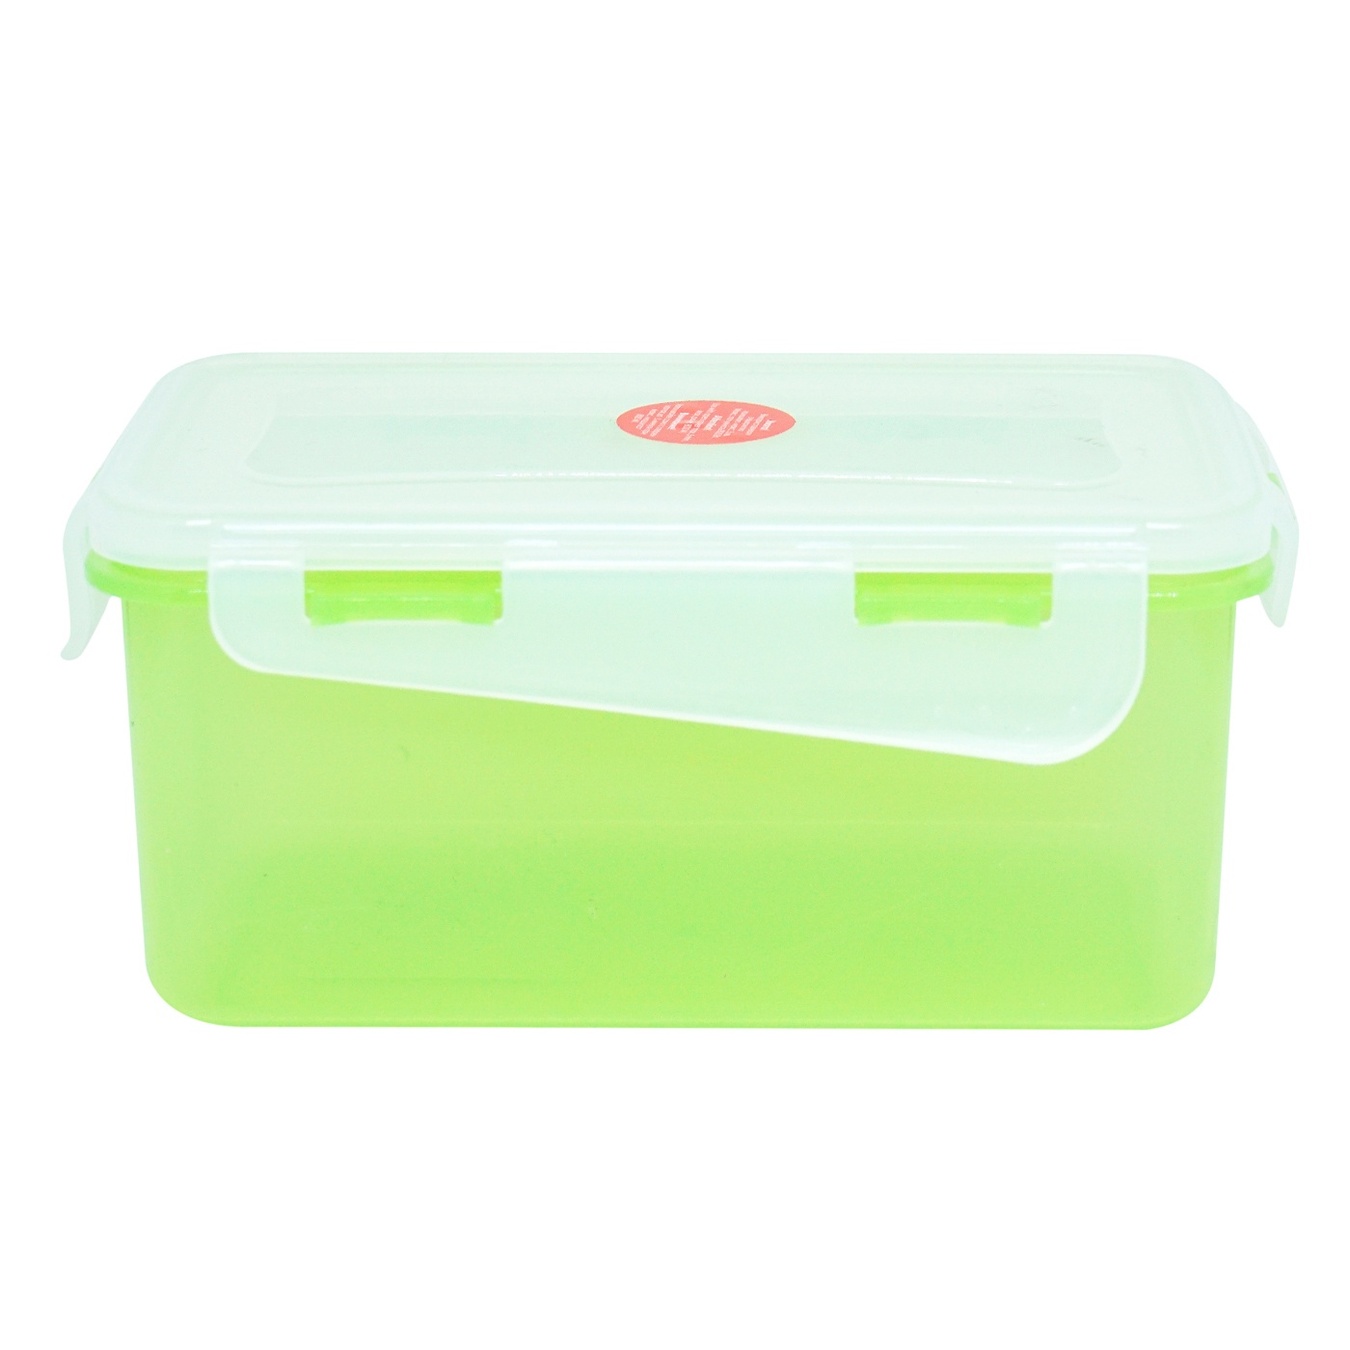 Fiesta Aleana universal container rectangular green/transparent 650 ml